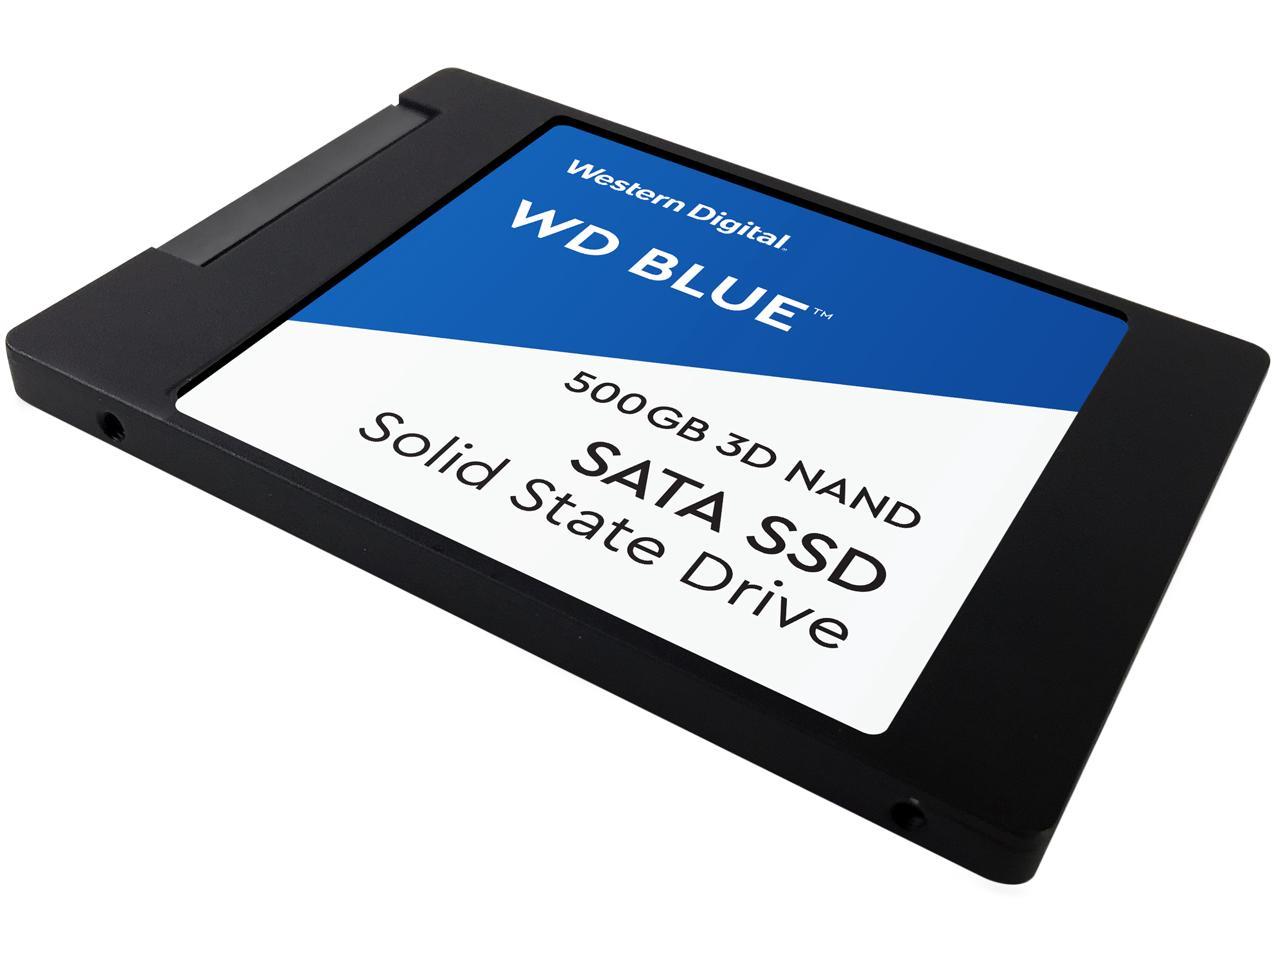 WD Blue 3D NAND 500GB Internal SSD - Solid State Drive - Newegg.com